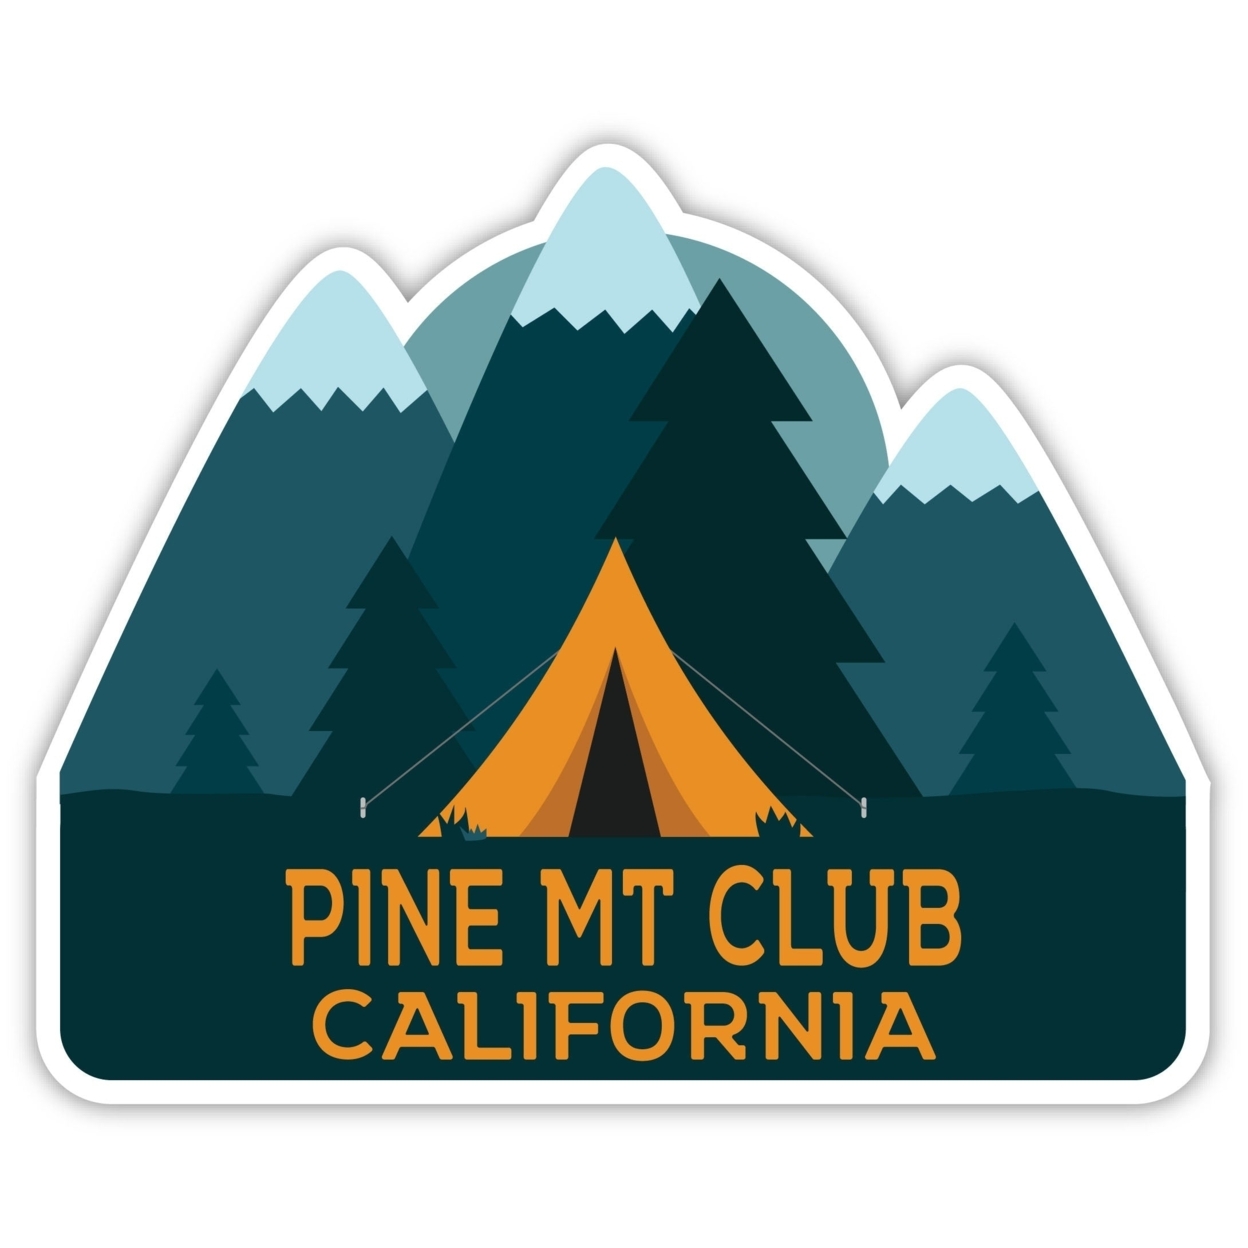 Pine Mt Club California Souvenir Decorative Stickers (Choose Theme And Size) - Single Unit, 4-Inch, Tent